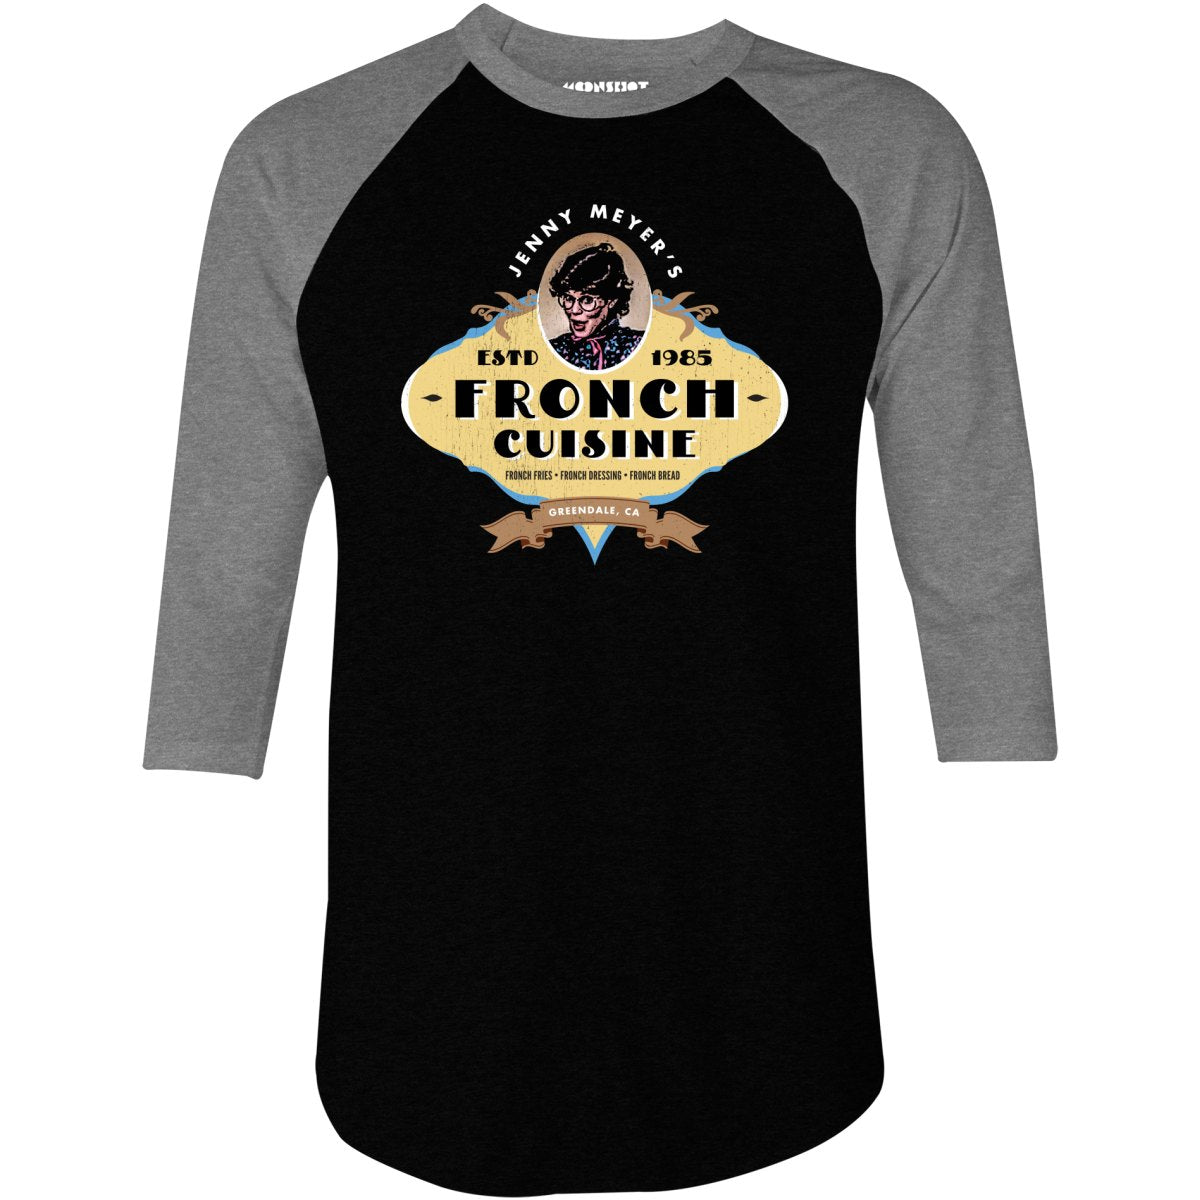 Jenny Meyers Fronch Cuisine - 3/4 Sleeve Raglan T-Shirt